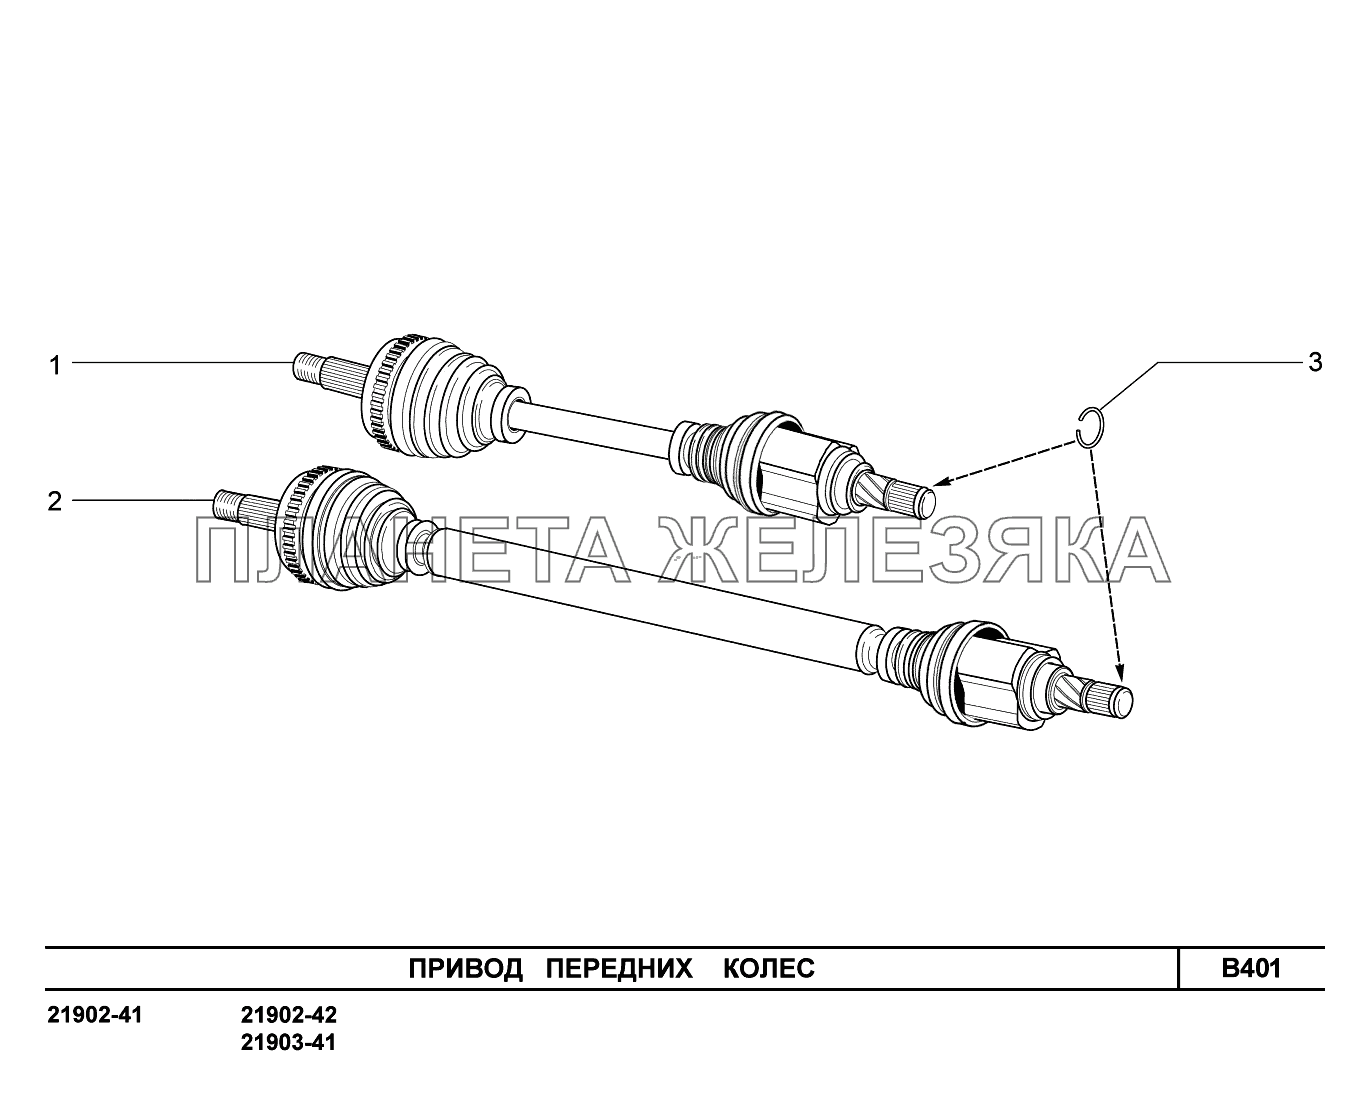 B401. Привод передних колес Lada Granta-2190